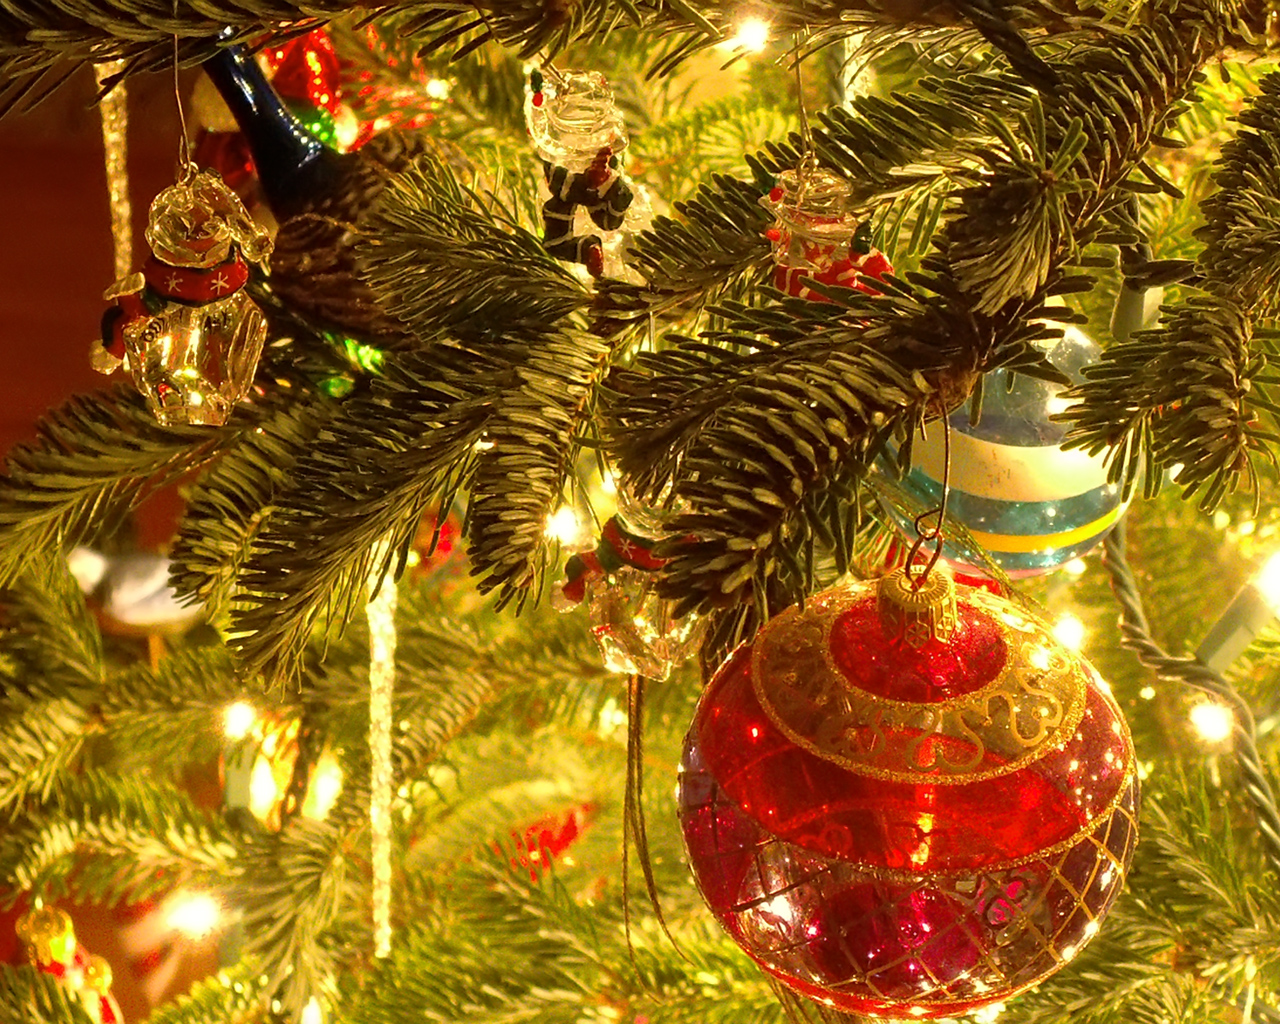 http://1.bp.blogspot.com/-HnpRLC30OQs/TvYJKvhaxzI/AAAAAAAAAG8/v0WkOqNGmZE/s1600/35-Christmas-wallpapers-free-red-christmas-ball-hanging-in-tree-wallpaper.jpg